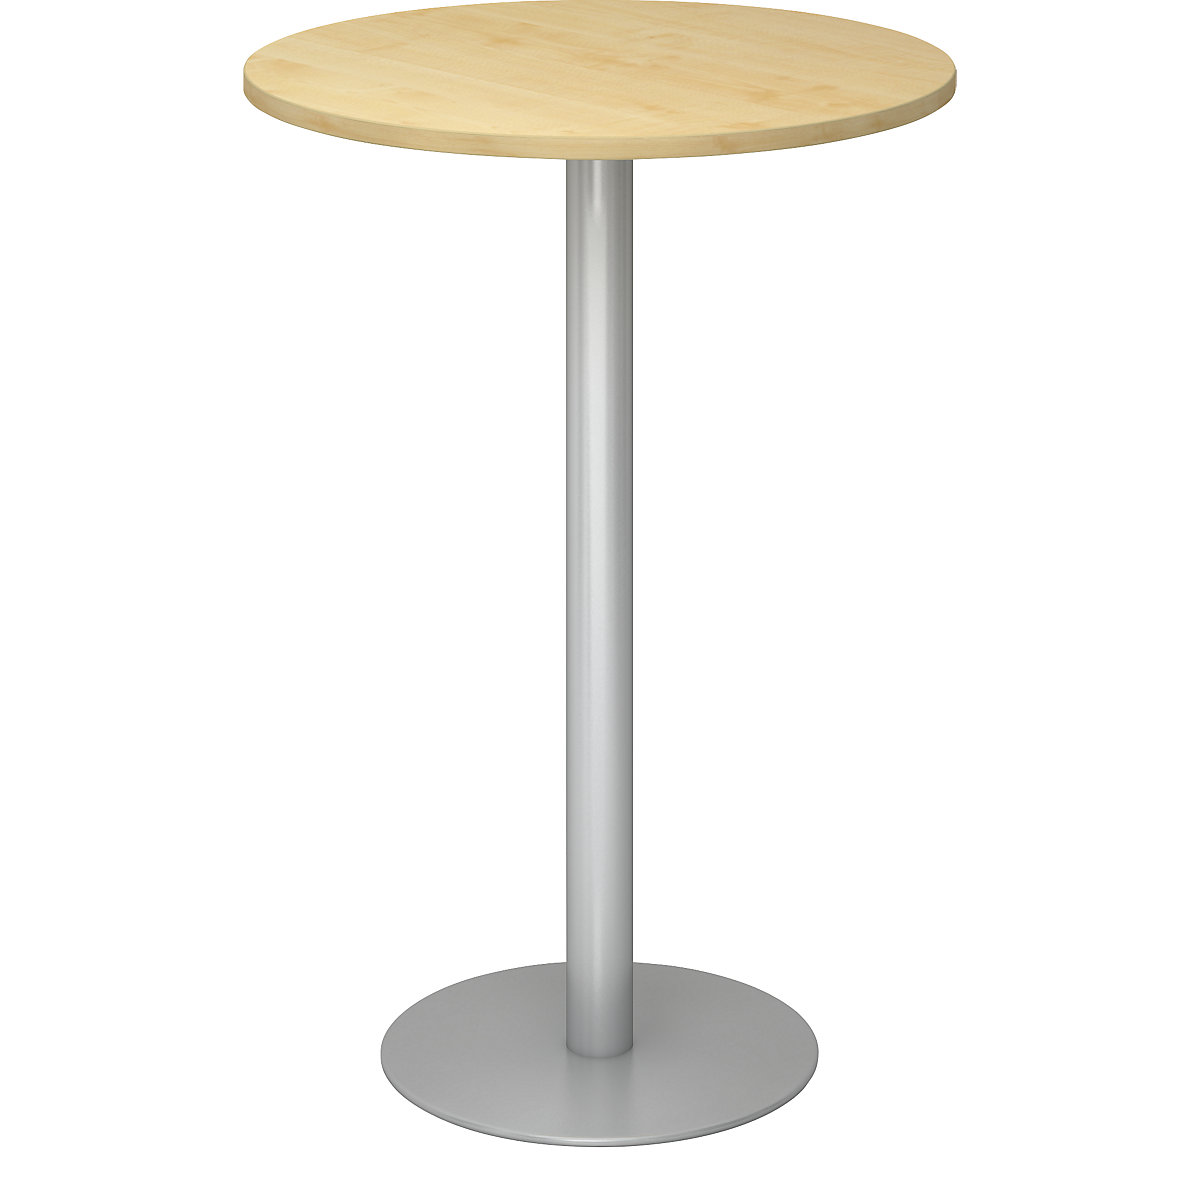 Pedestal table, Ø 800 mm